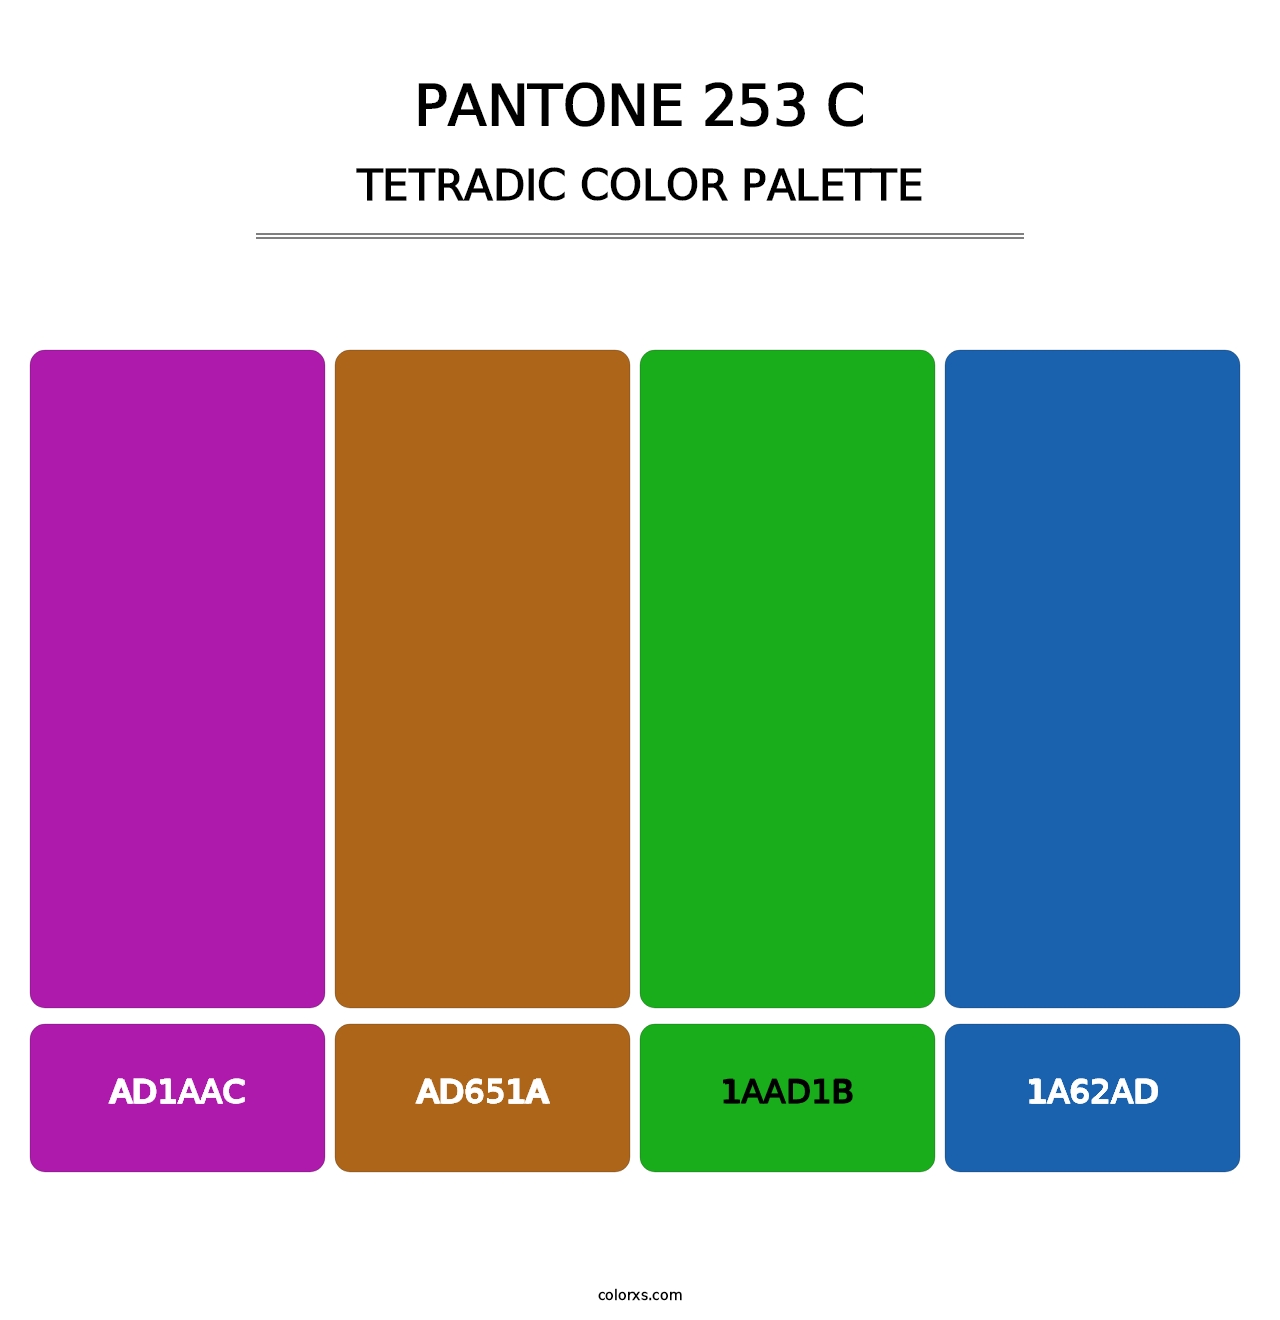 PANTONE 253 C - Tetradic Color Palette